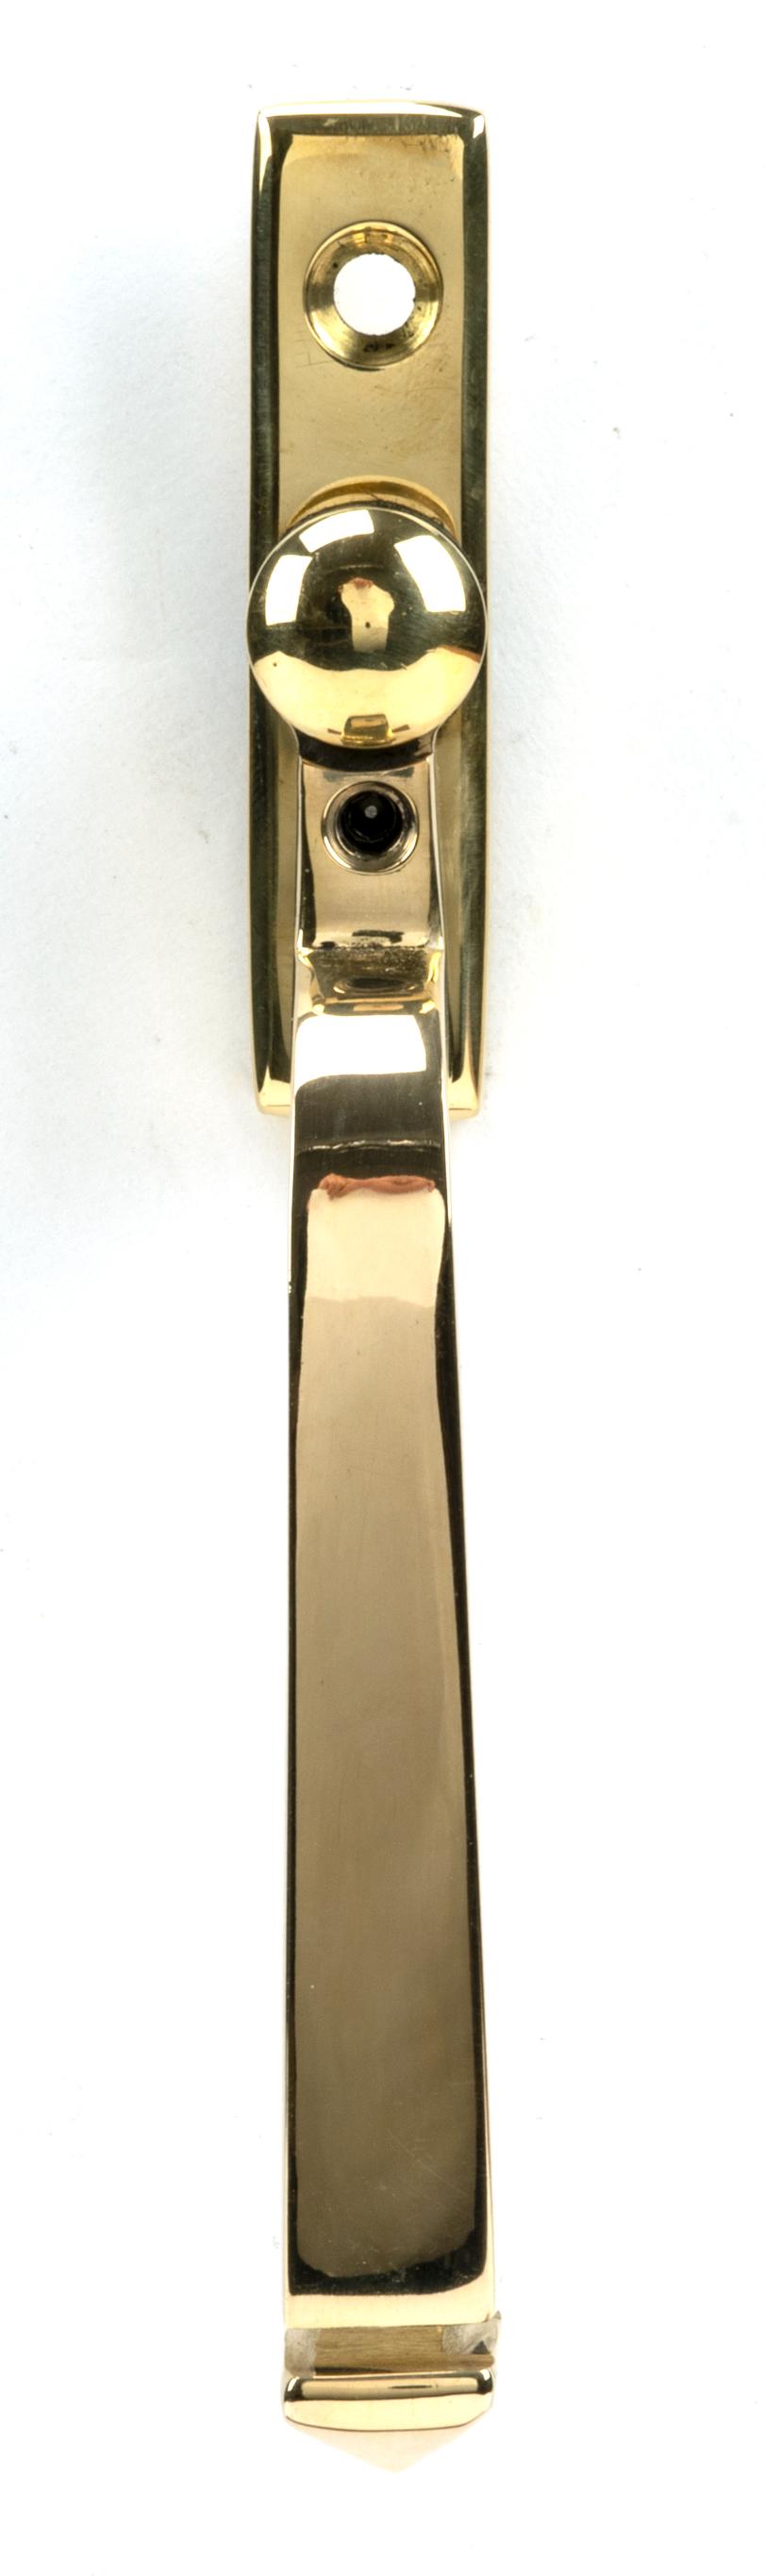 46711 Polished Brass Avon Espag